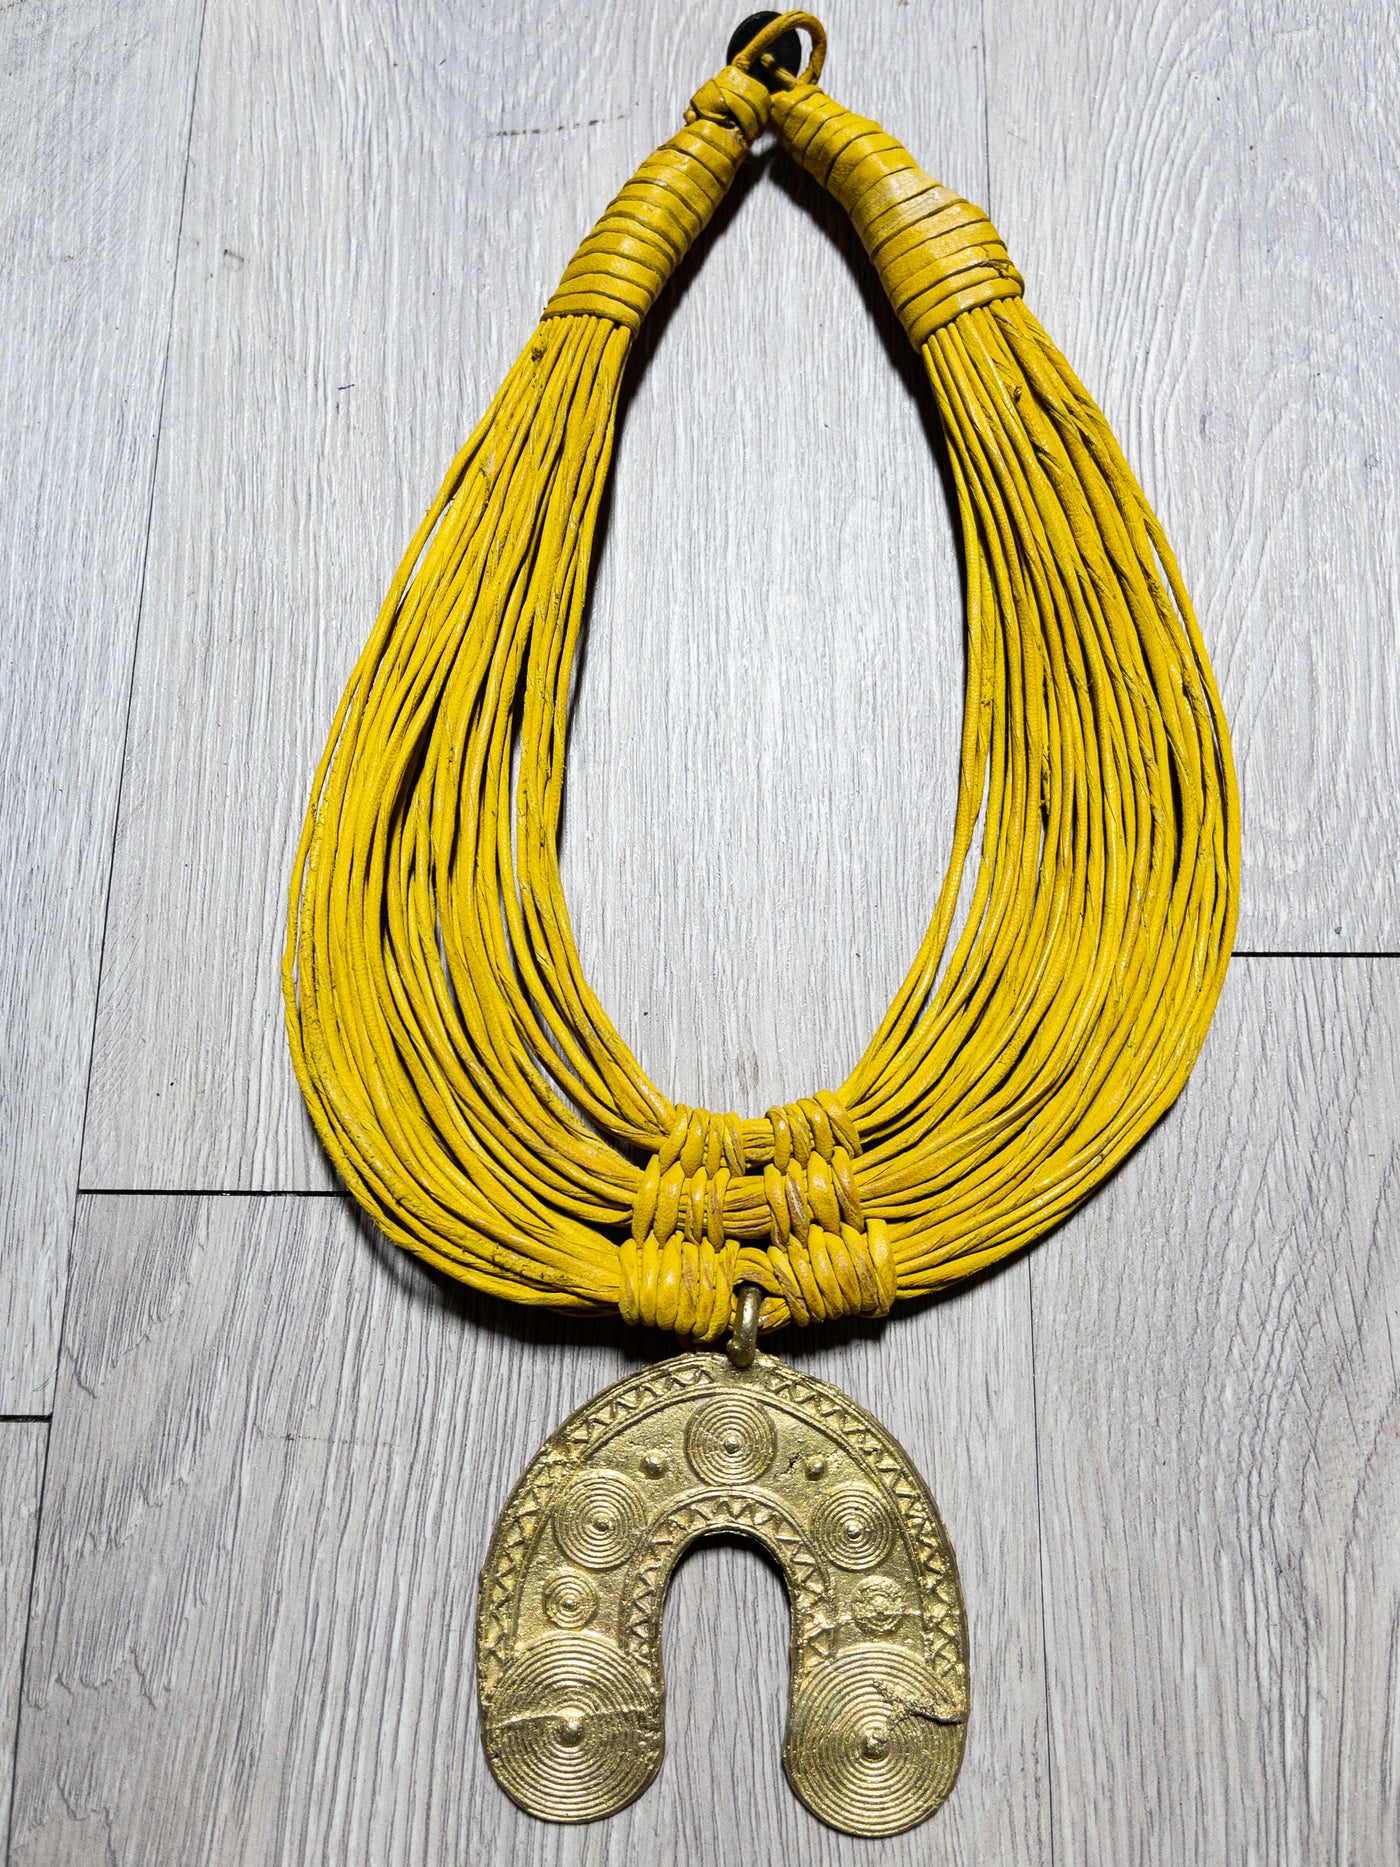 Busia Genuine leather and Bronze Pendant Necklace : U-Shape